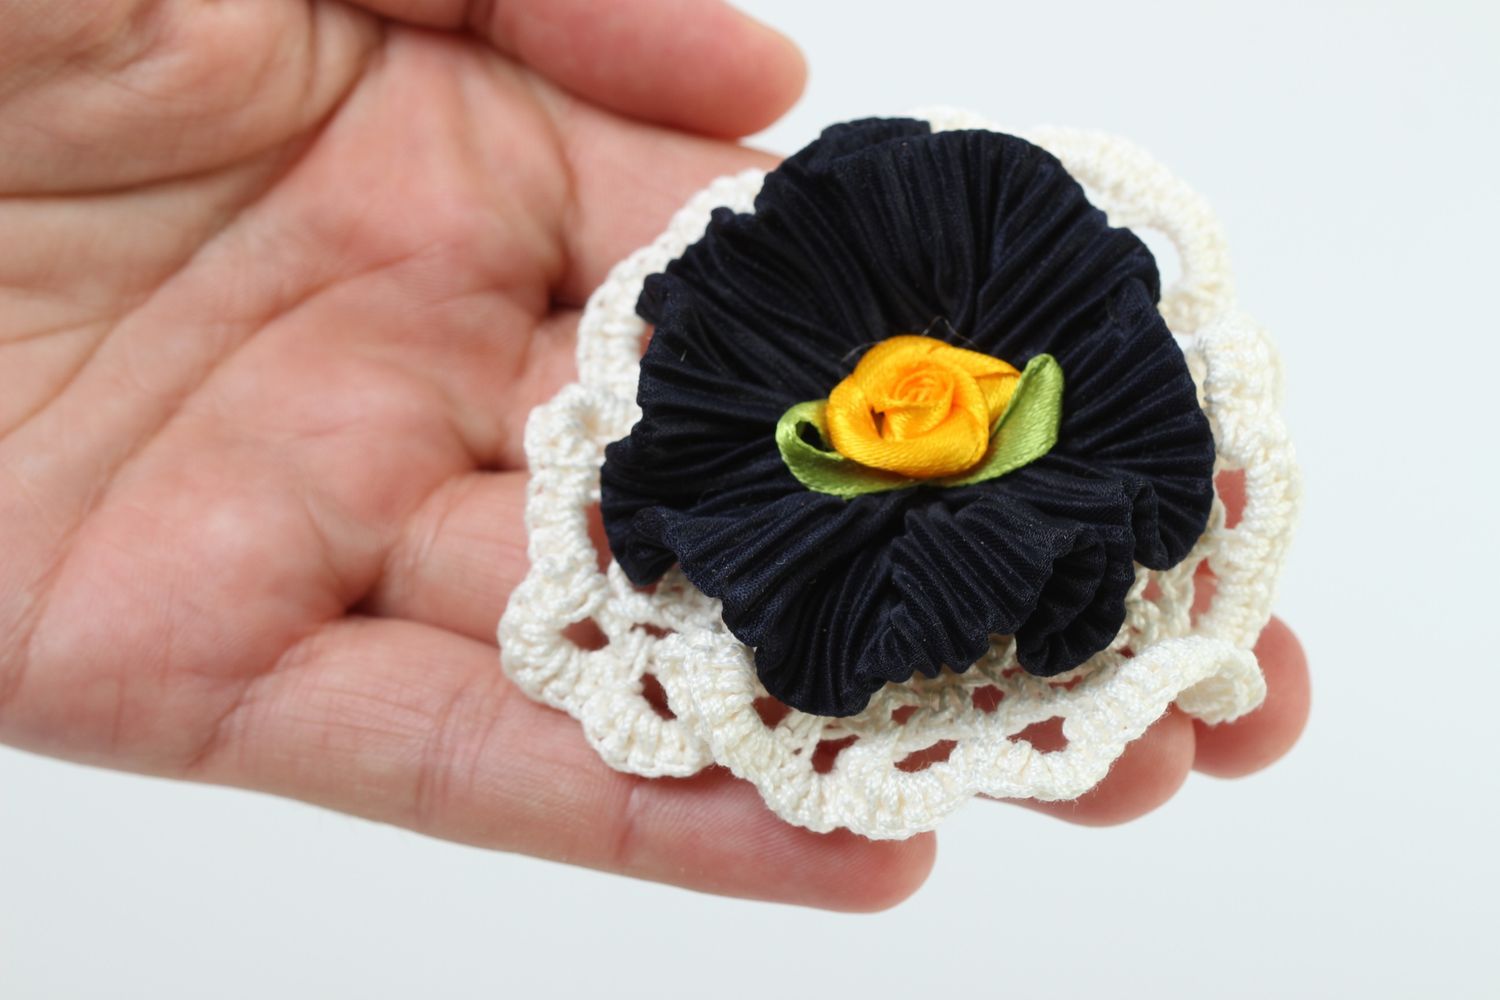 Handmade crochet flower decorative flowers jewelry craft supplies crochet ideas photo 5